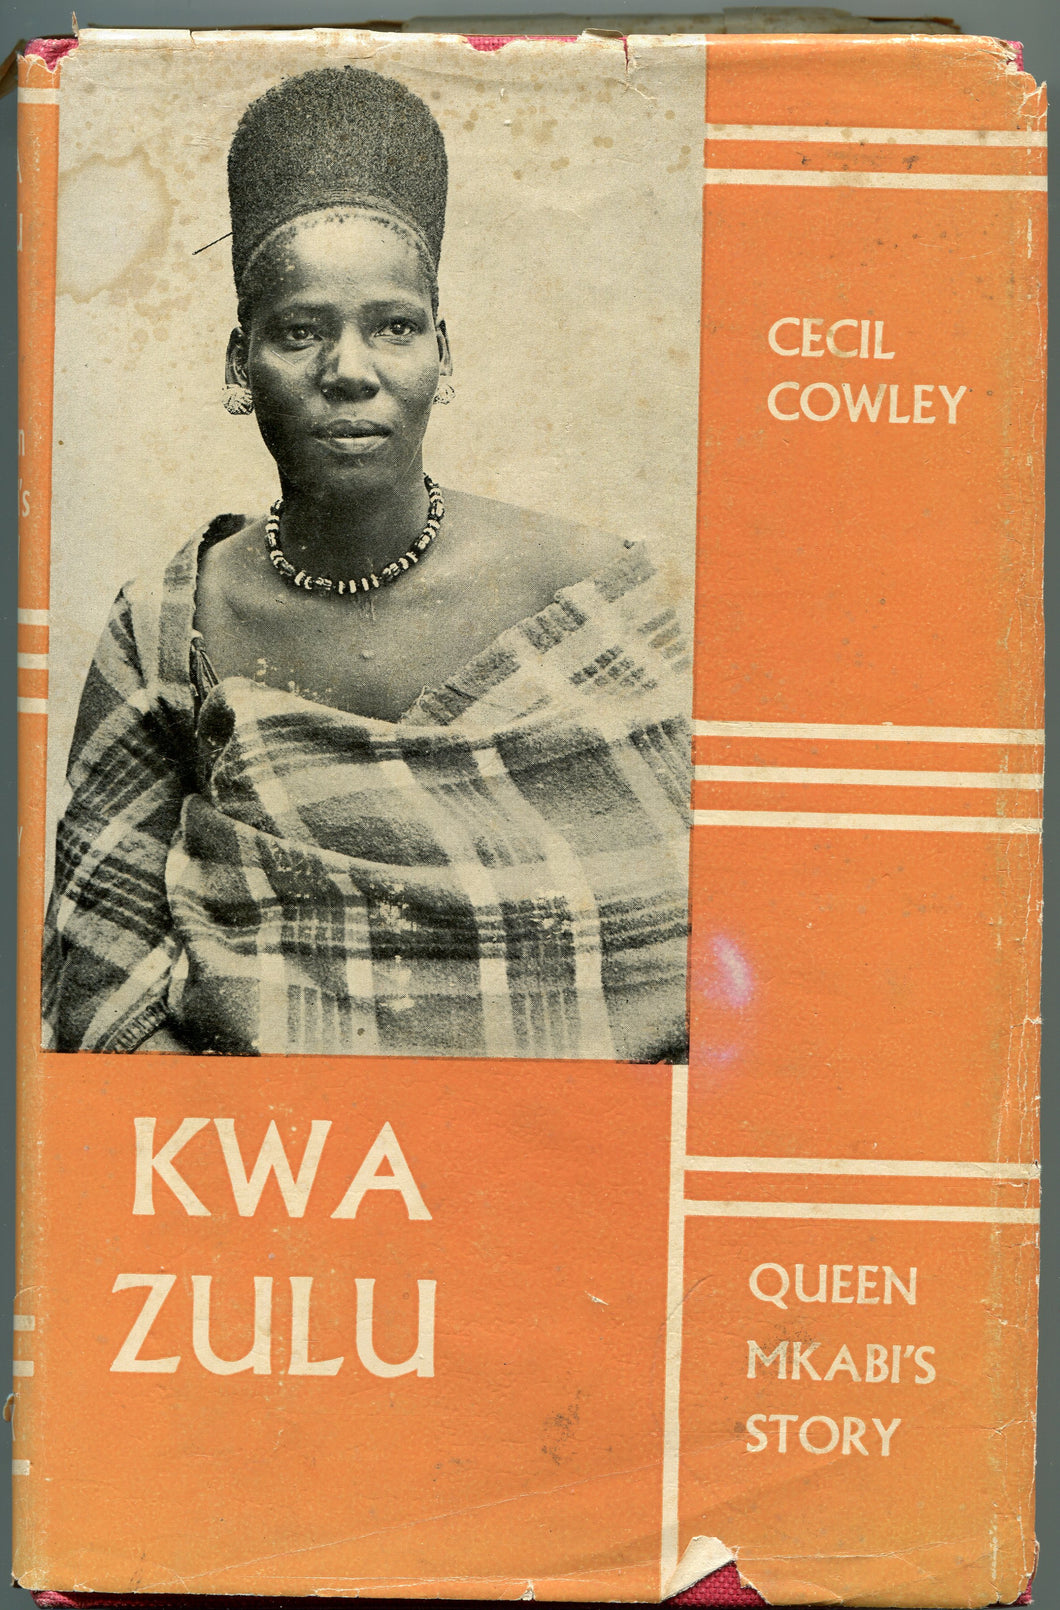 'KWAZULU; Queen Mkabi's Story' by Cecil Cowley